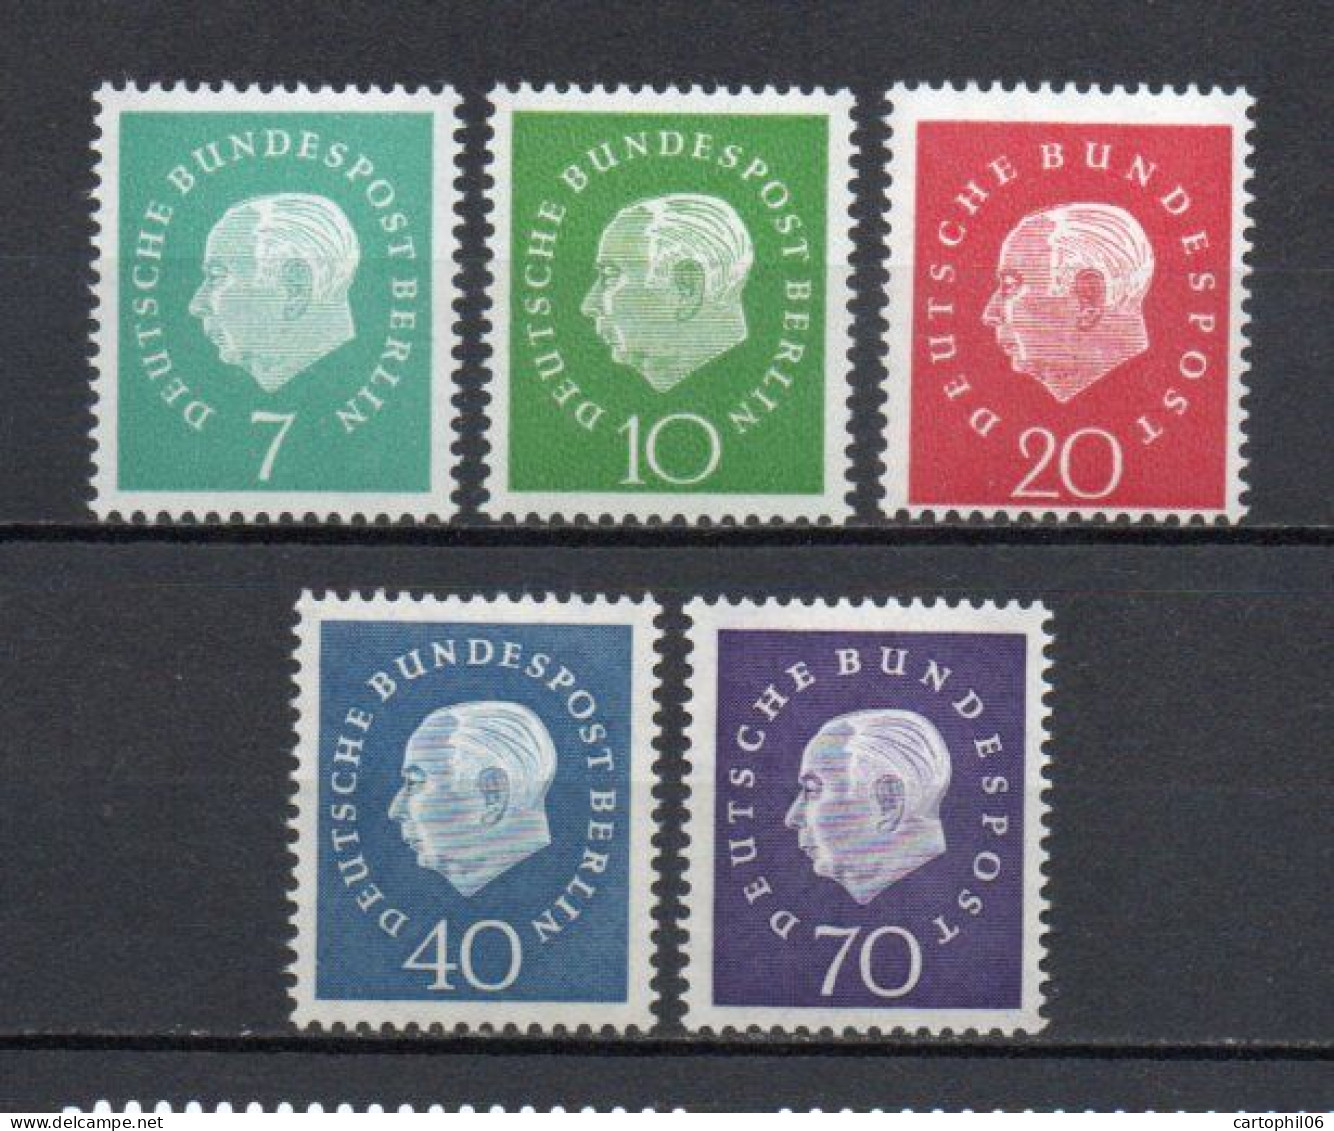 - ALLEMAGNE FÉDÉRALE N° 173/77 Neufs ** MNH - Série Président Theodor Heuss 1959 (5 Timbres) - Cote 21,50 € - - Unused Stamps